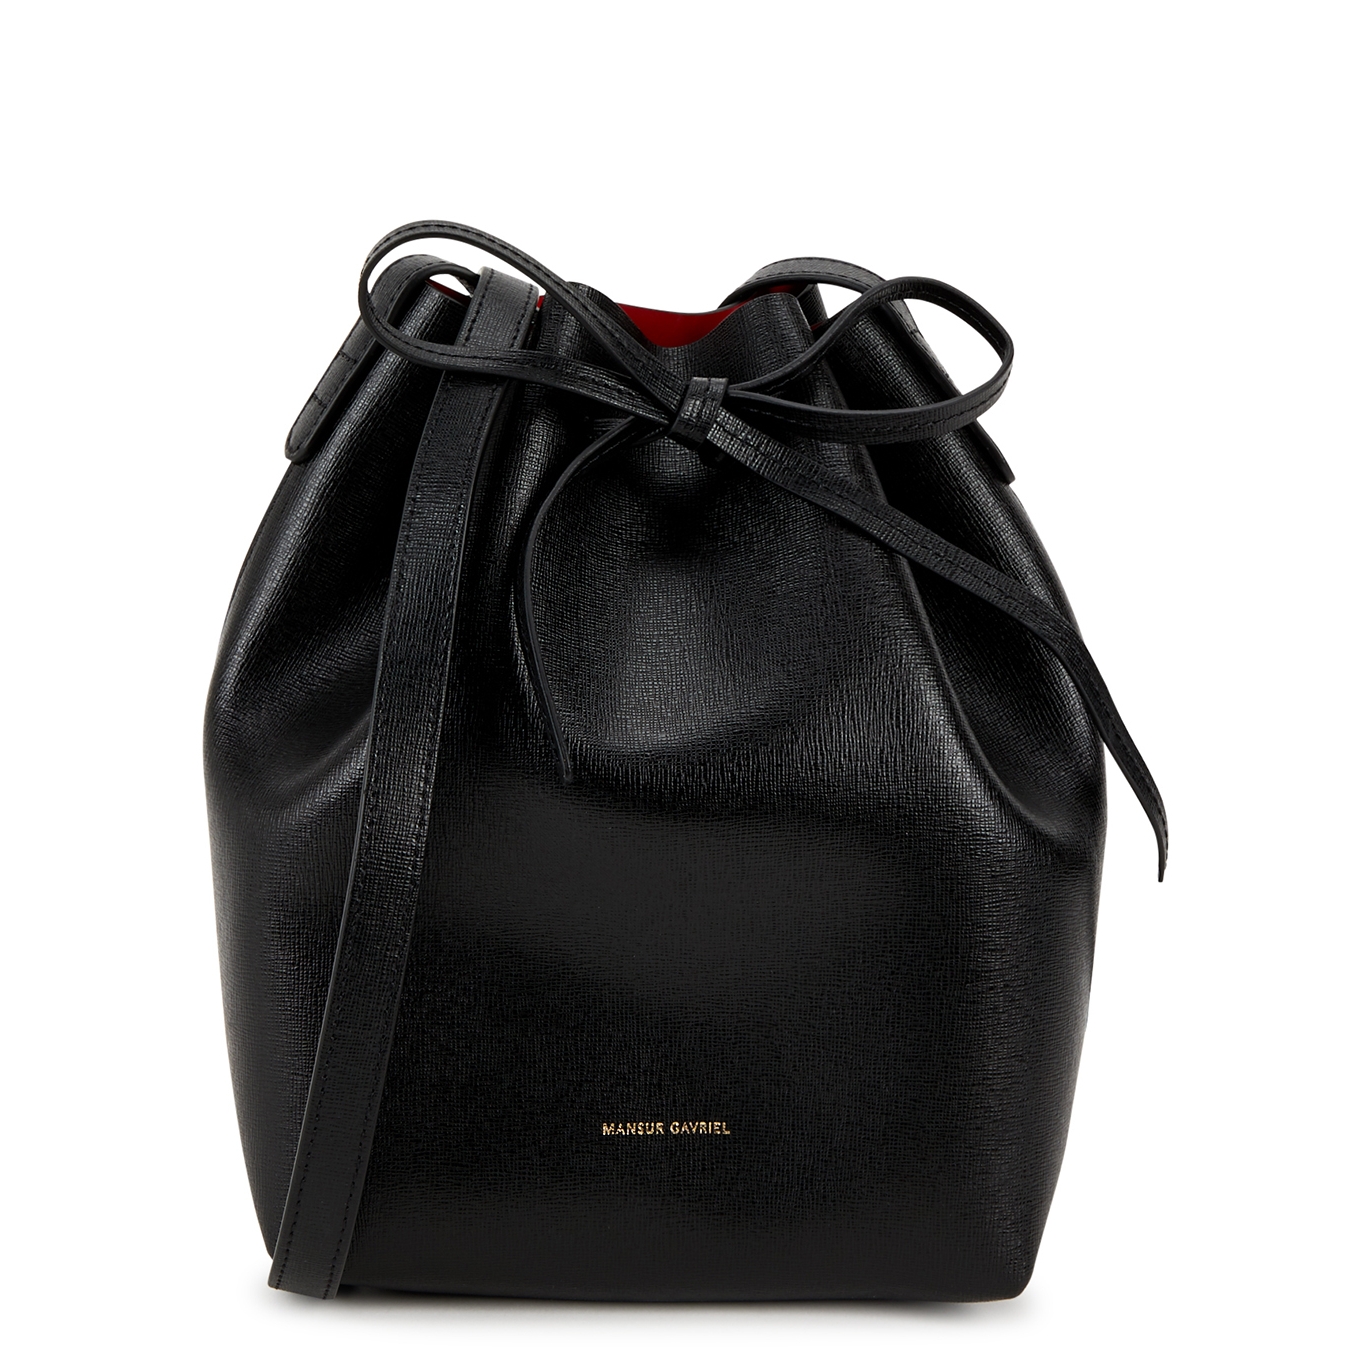 Mansur Gavriel Mini Saffiano Leather Bucket Bag In Black And Red | ModeSens